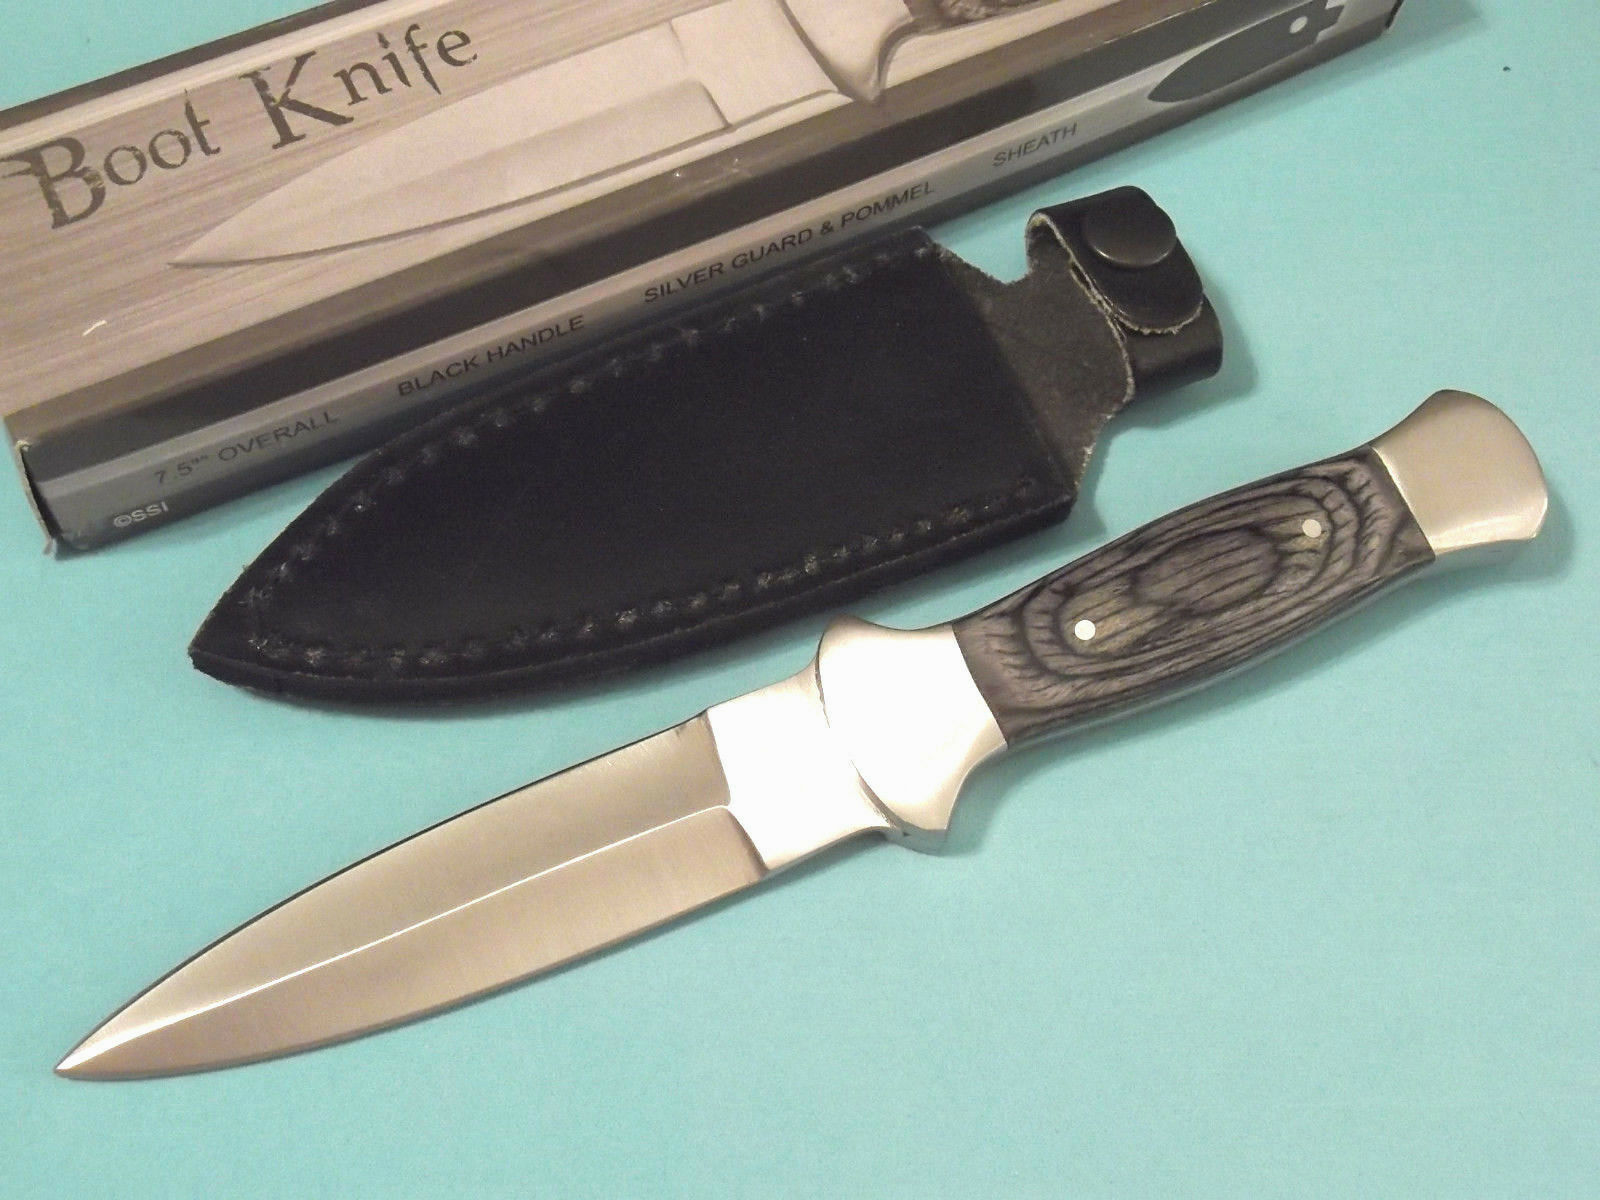 Boot Knife 203403 Black Wood Dagger Full Tang Knife 7 1/2" Overall Pa3403 New!